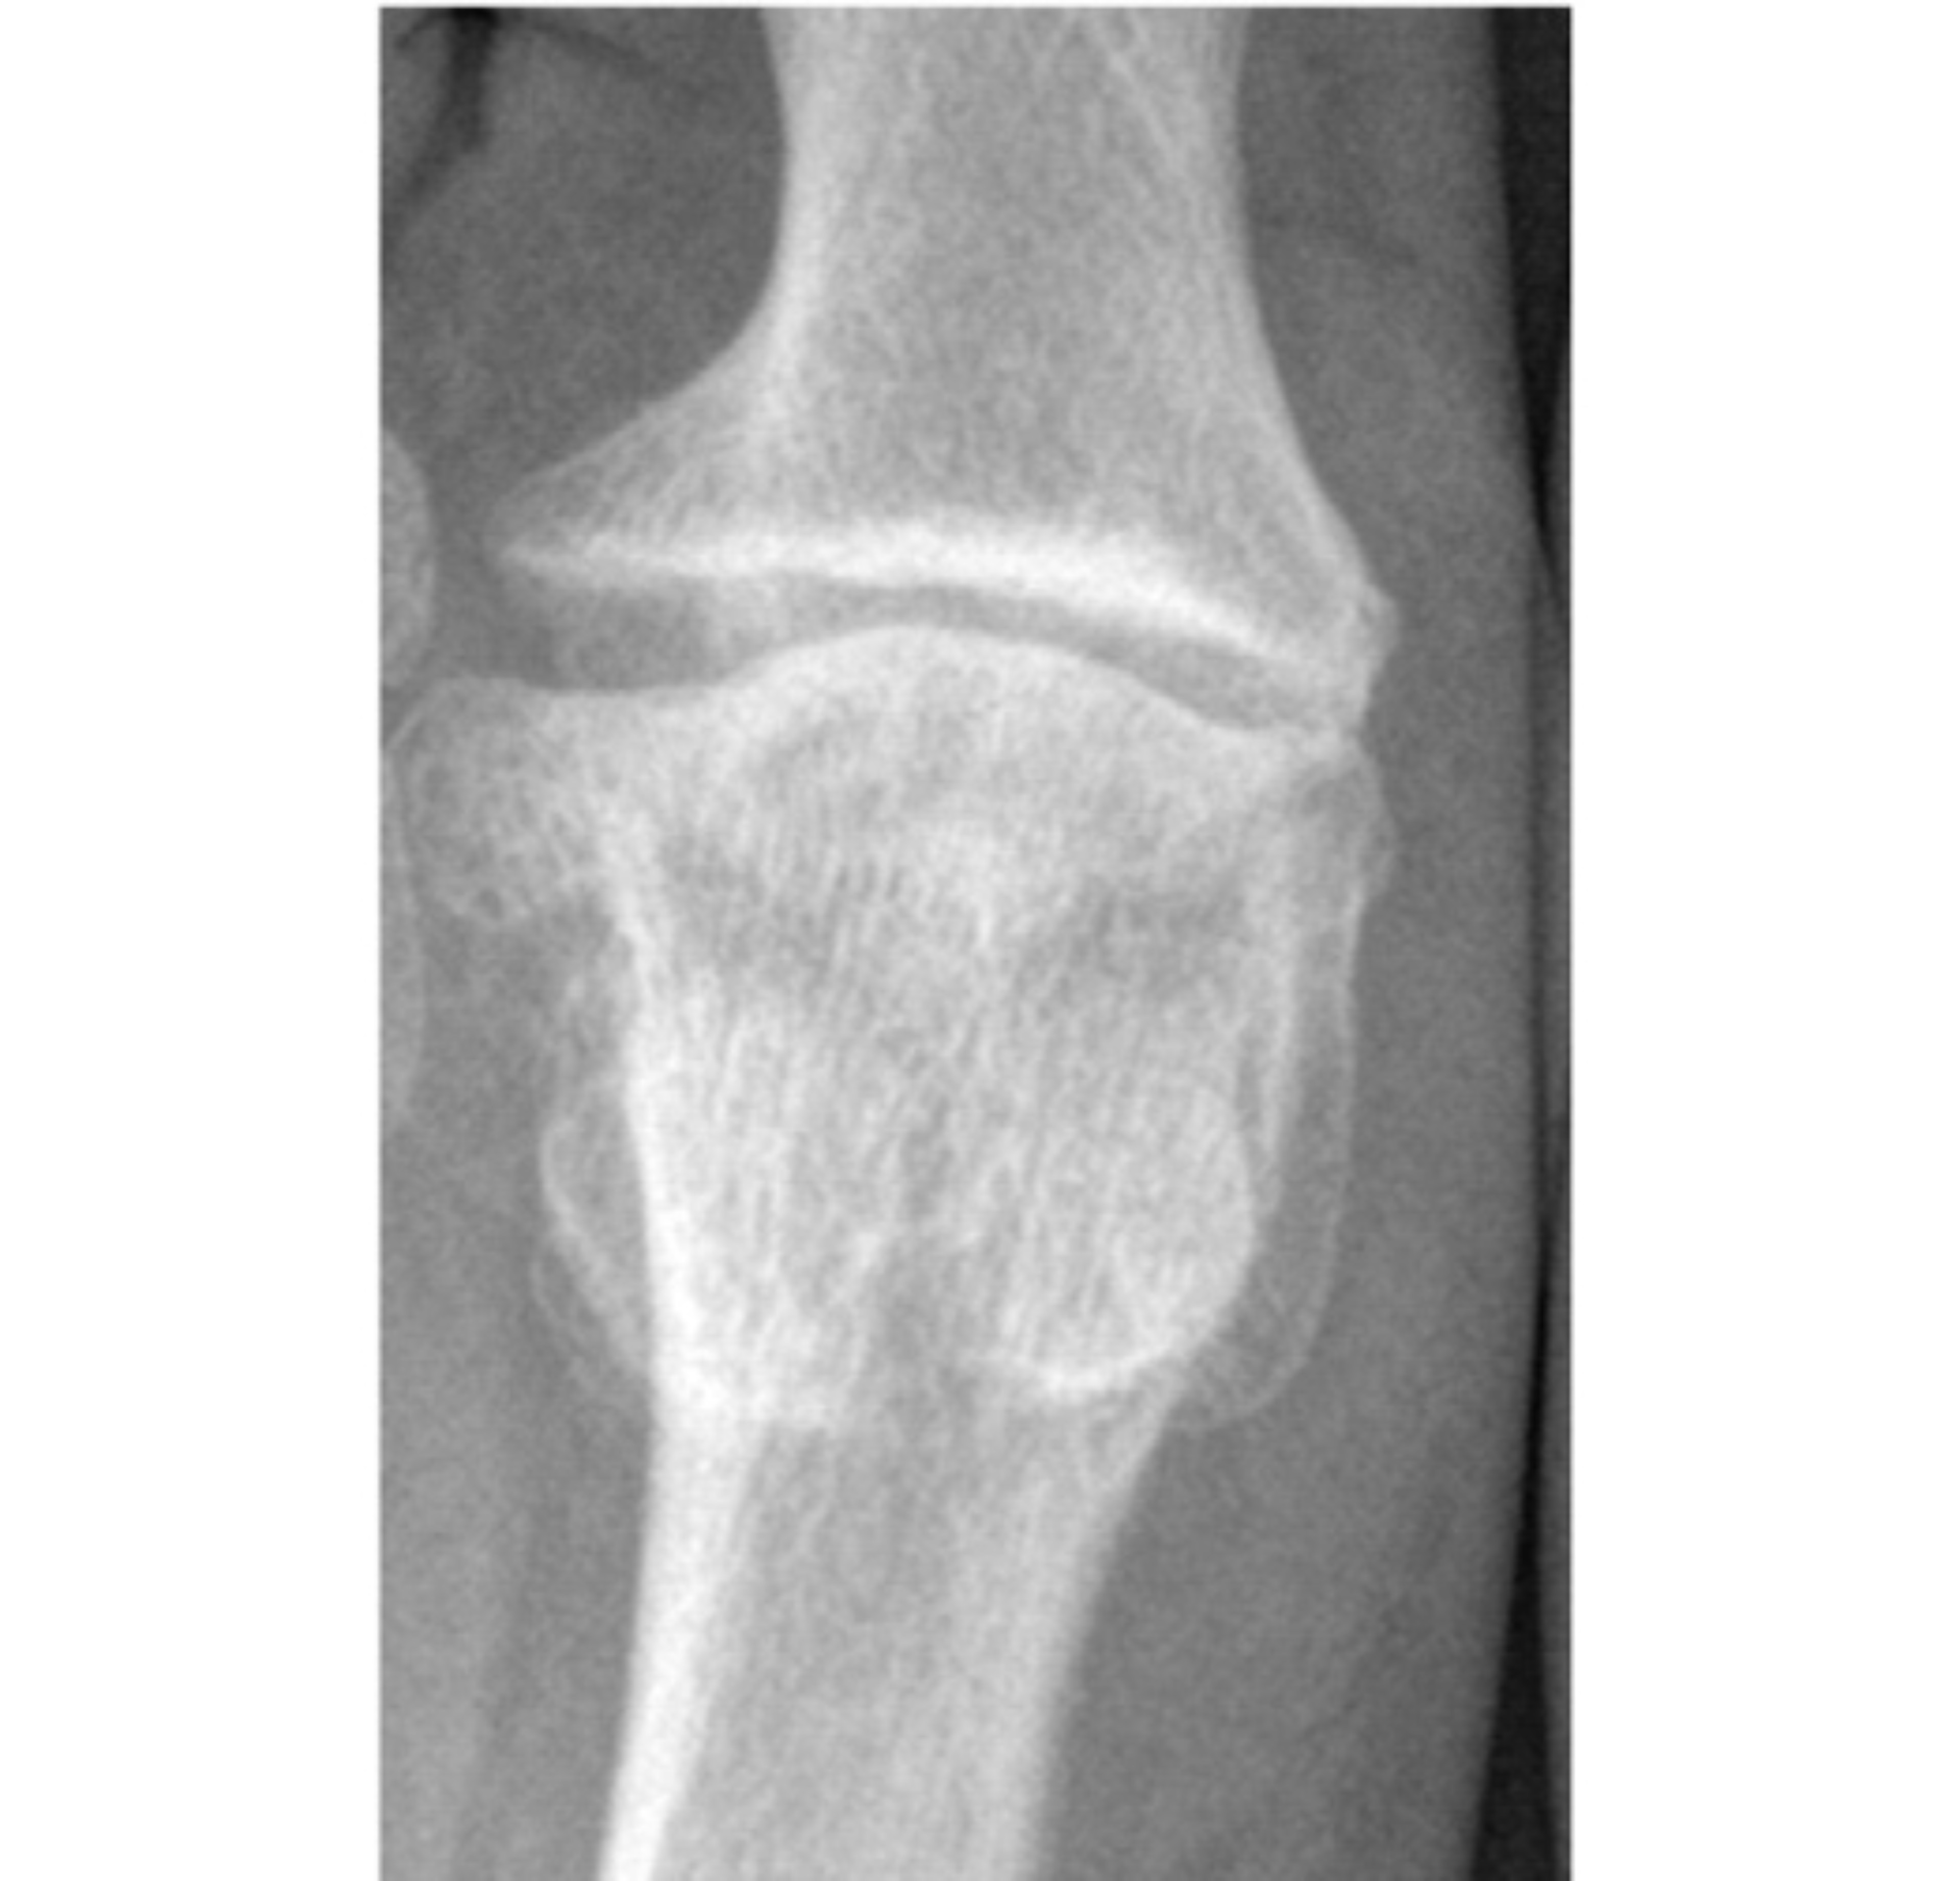 artrosis-de-la-articulacion-metatarsofalangica-caso-clinico